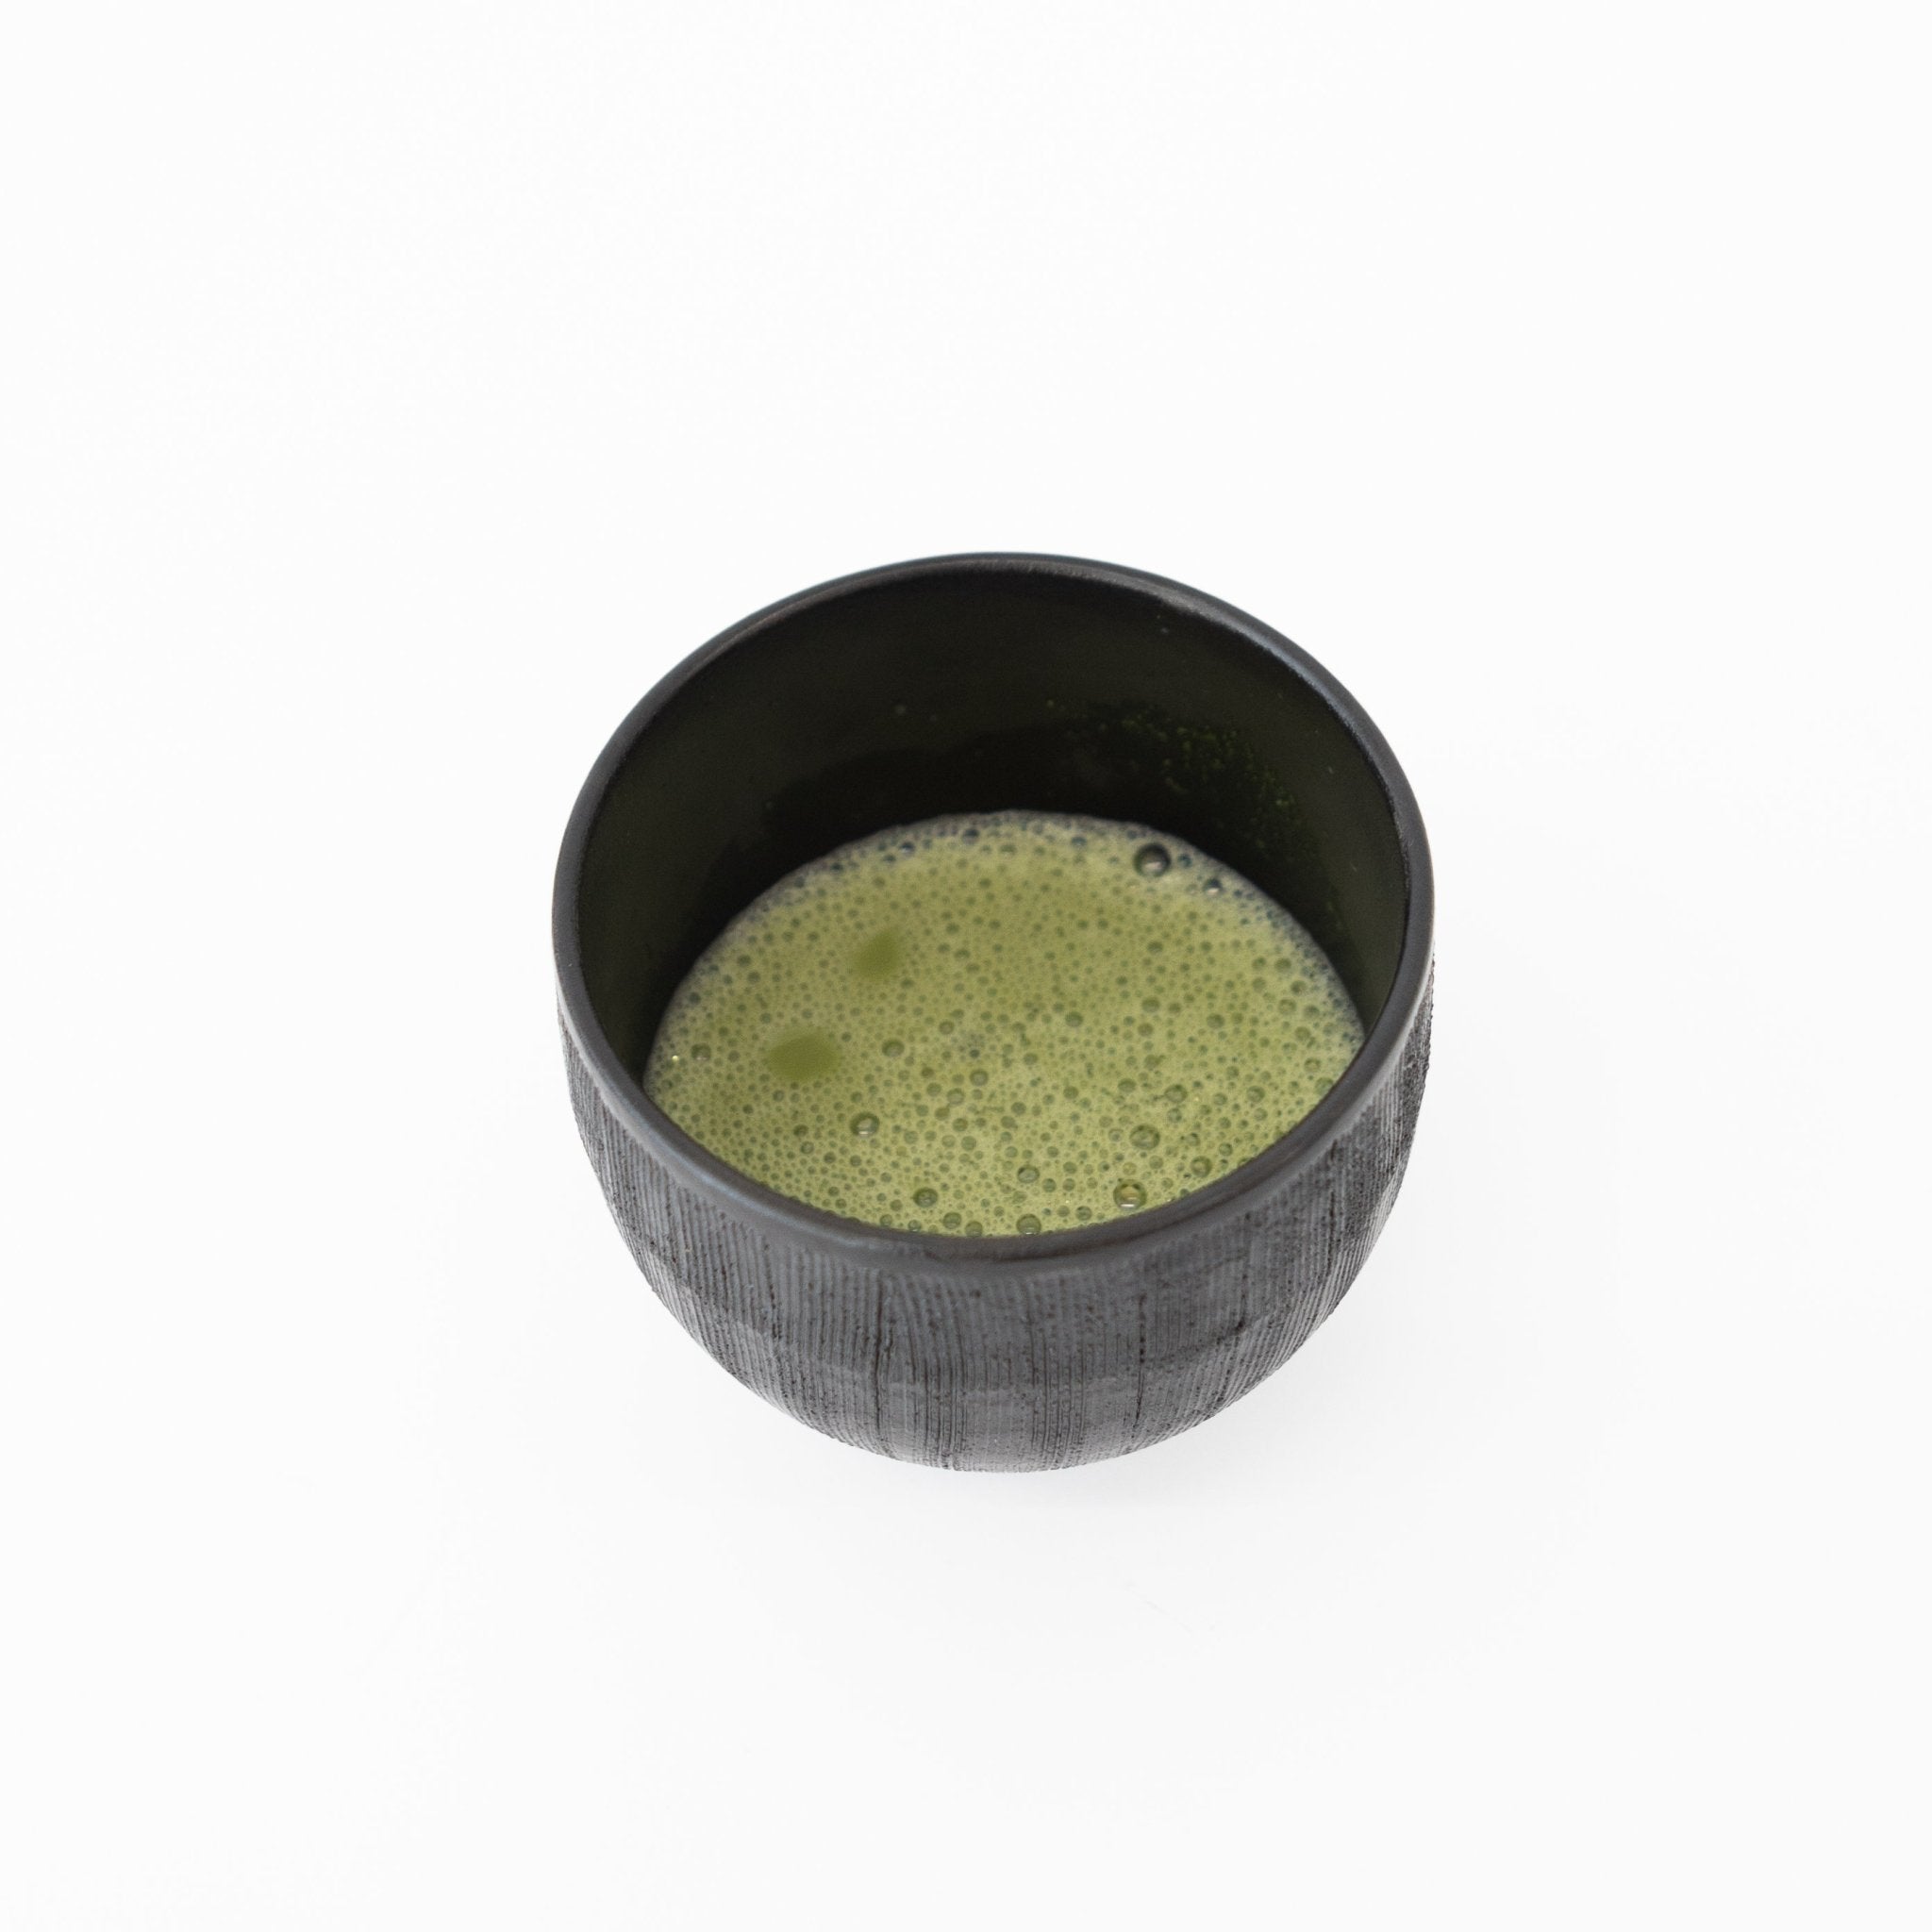 Koushungama Tea (Matcha) Bowls - tortoise general store